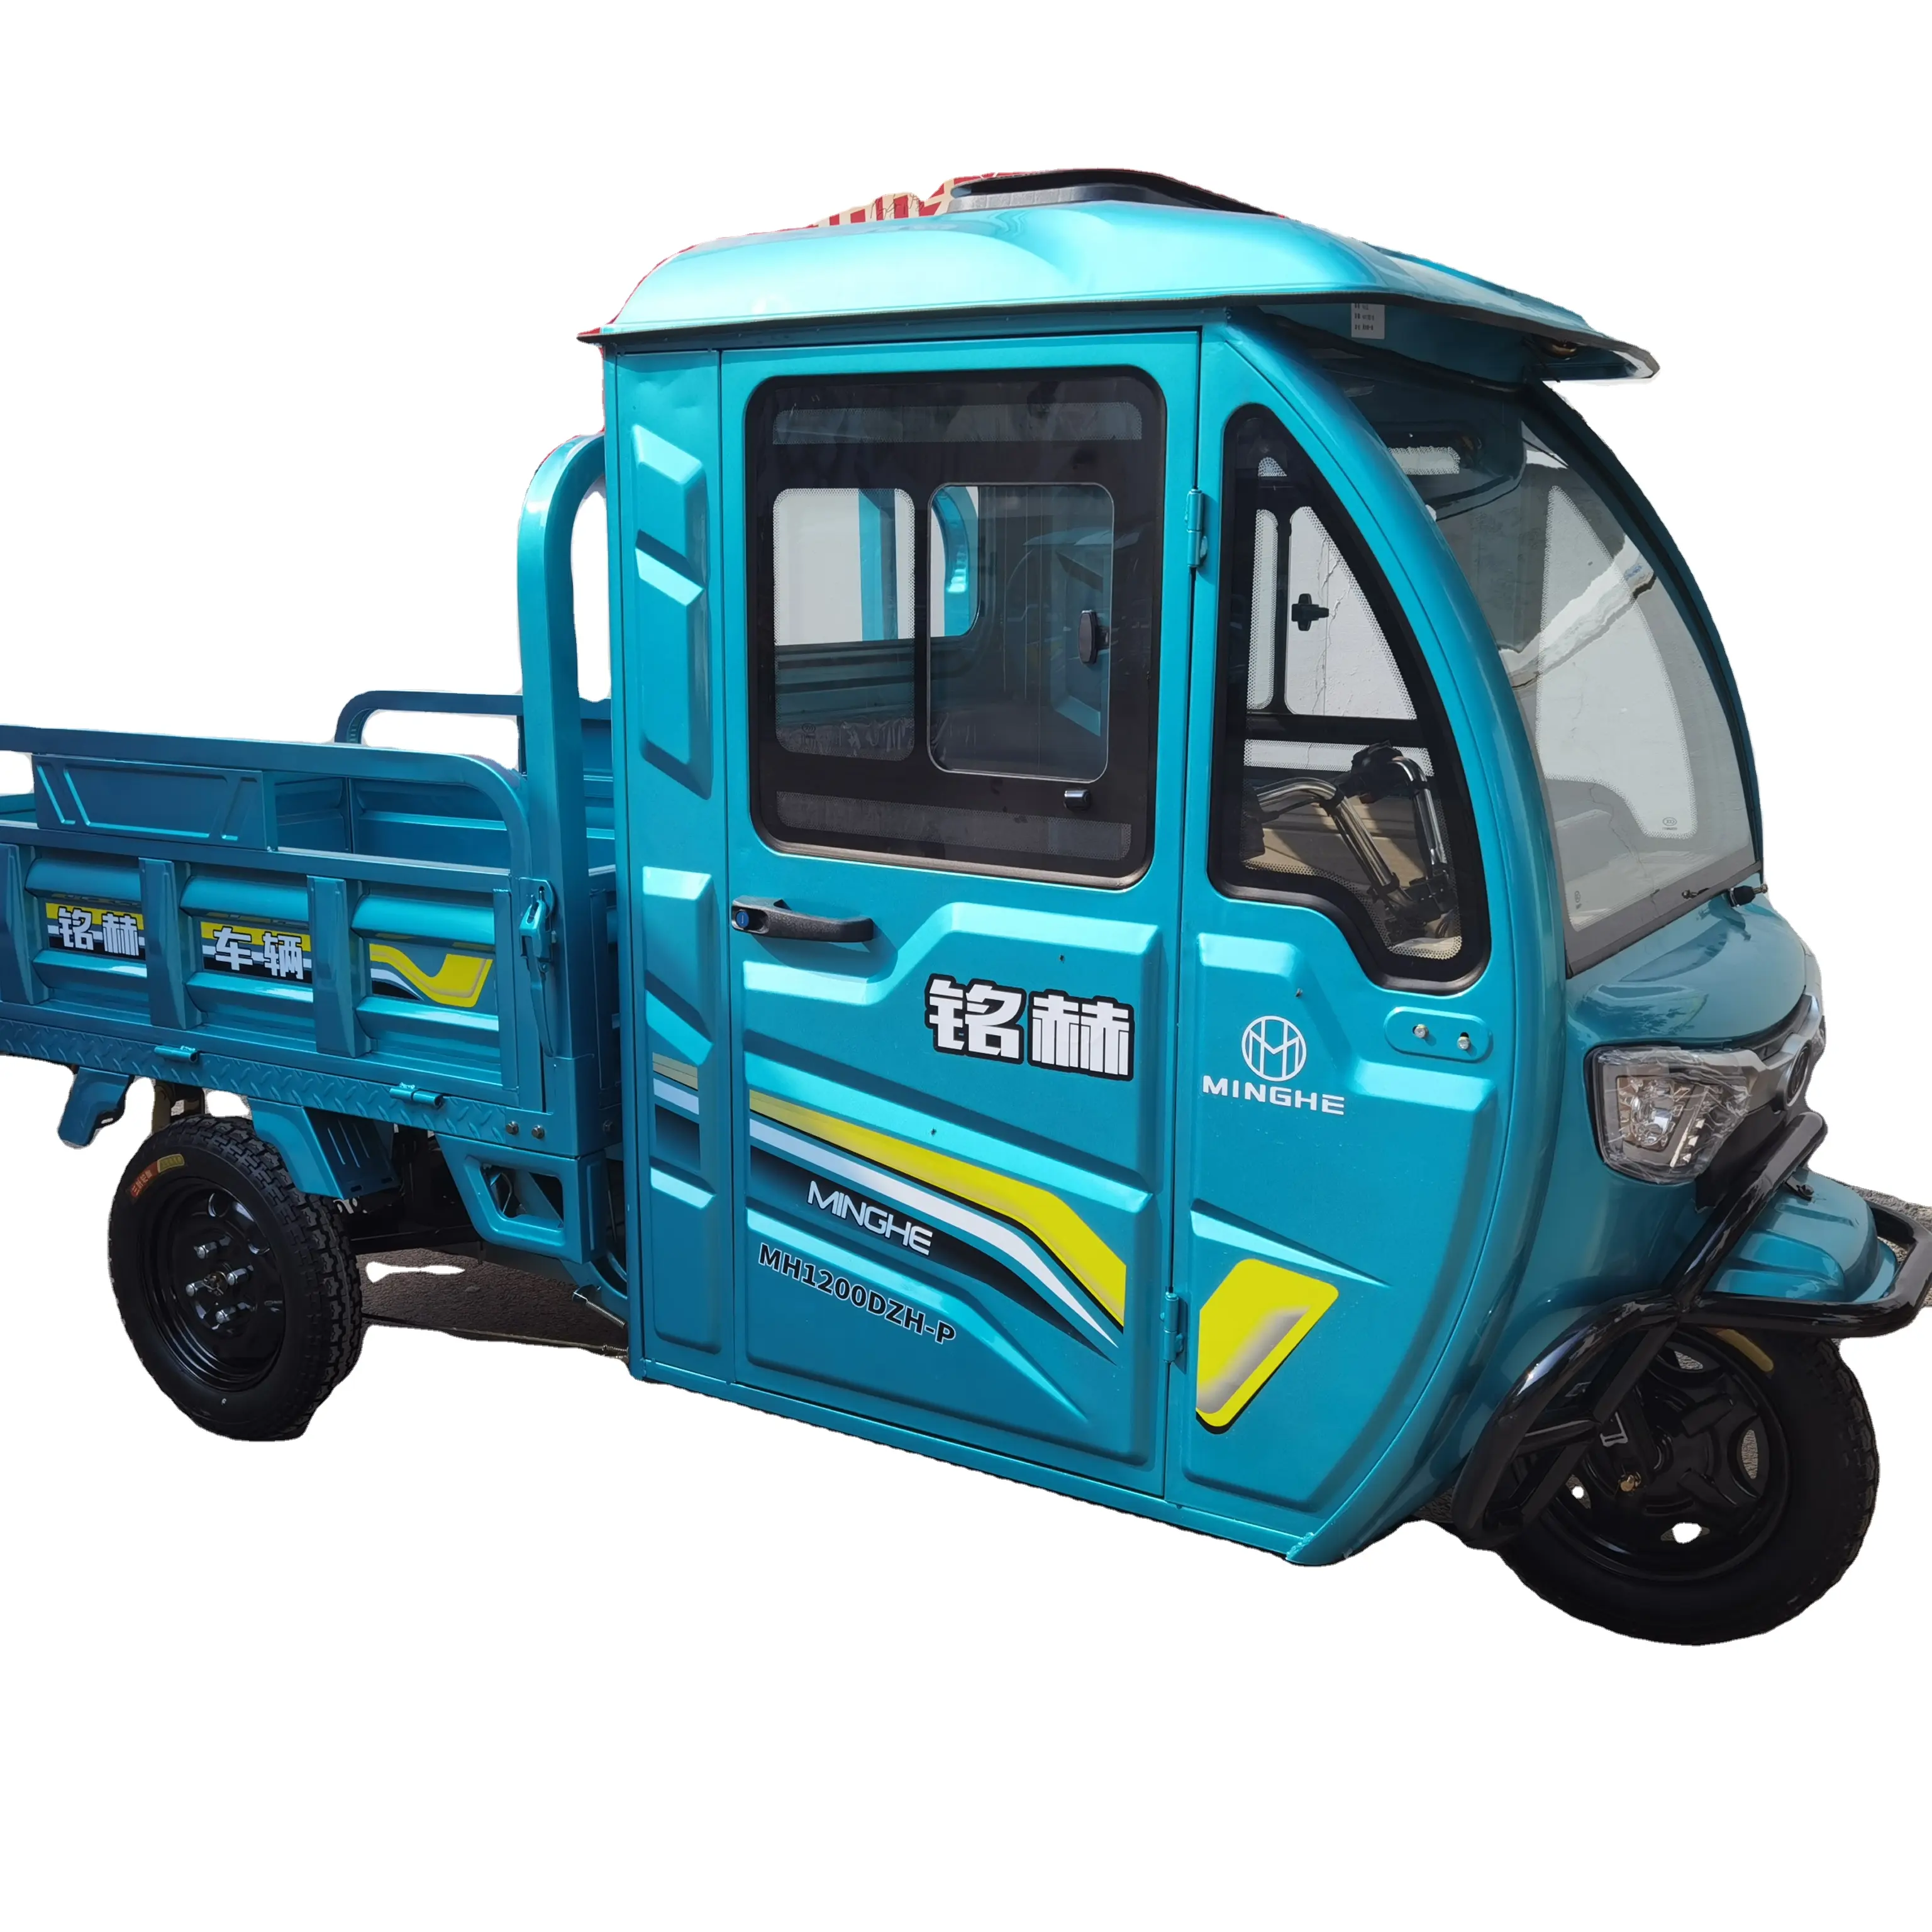 Rickshaw bateria triciclo elétrica portátil, 1500 watts 60 km/h, carga